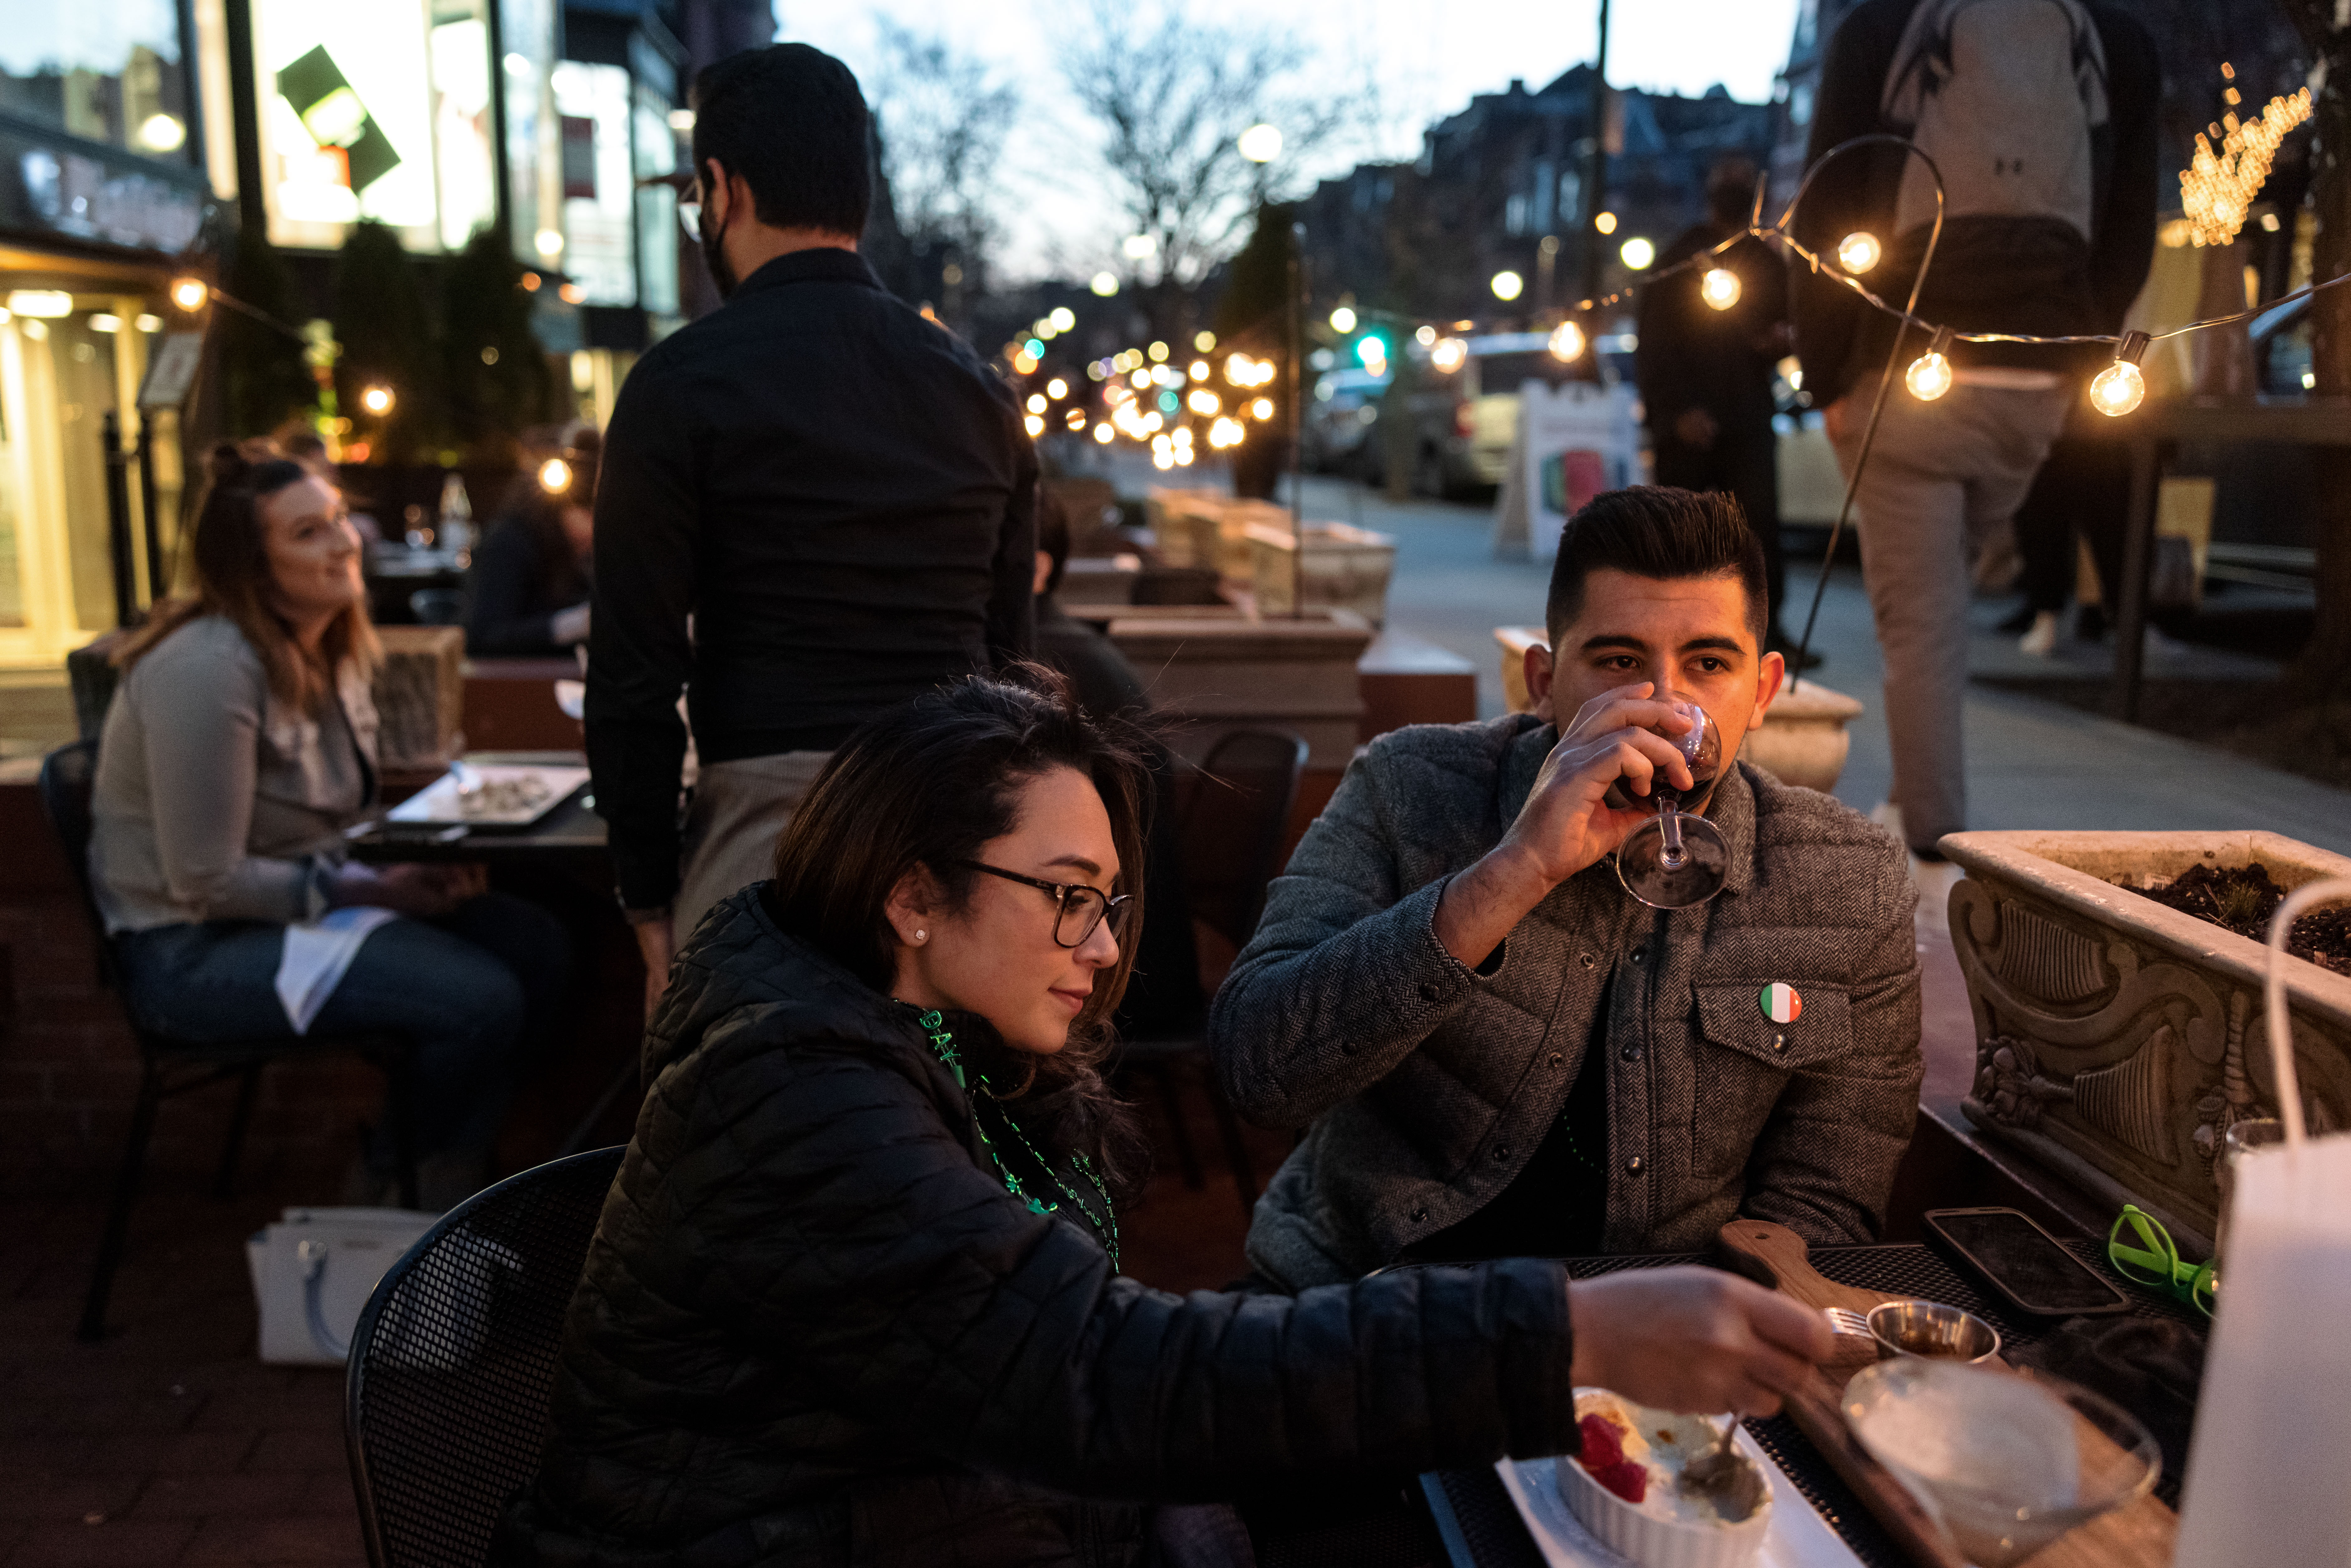 Natalia Santos and Andres Apodaca dined outside at the Piattini on Newbury Street in Boston.